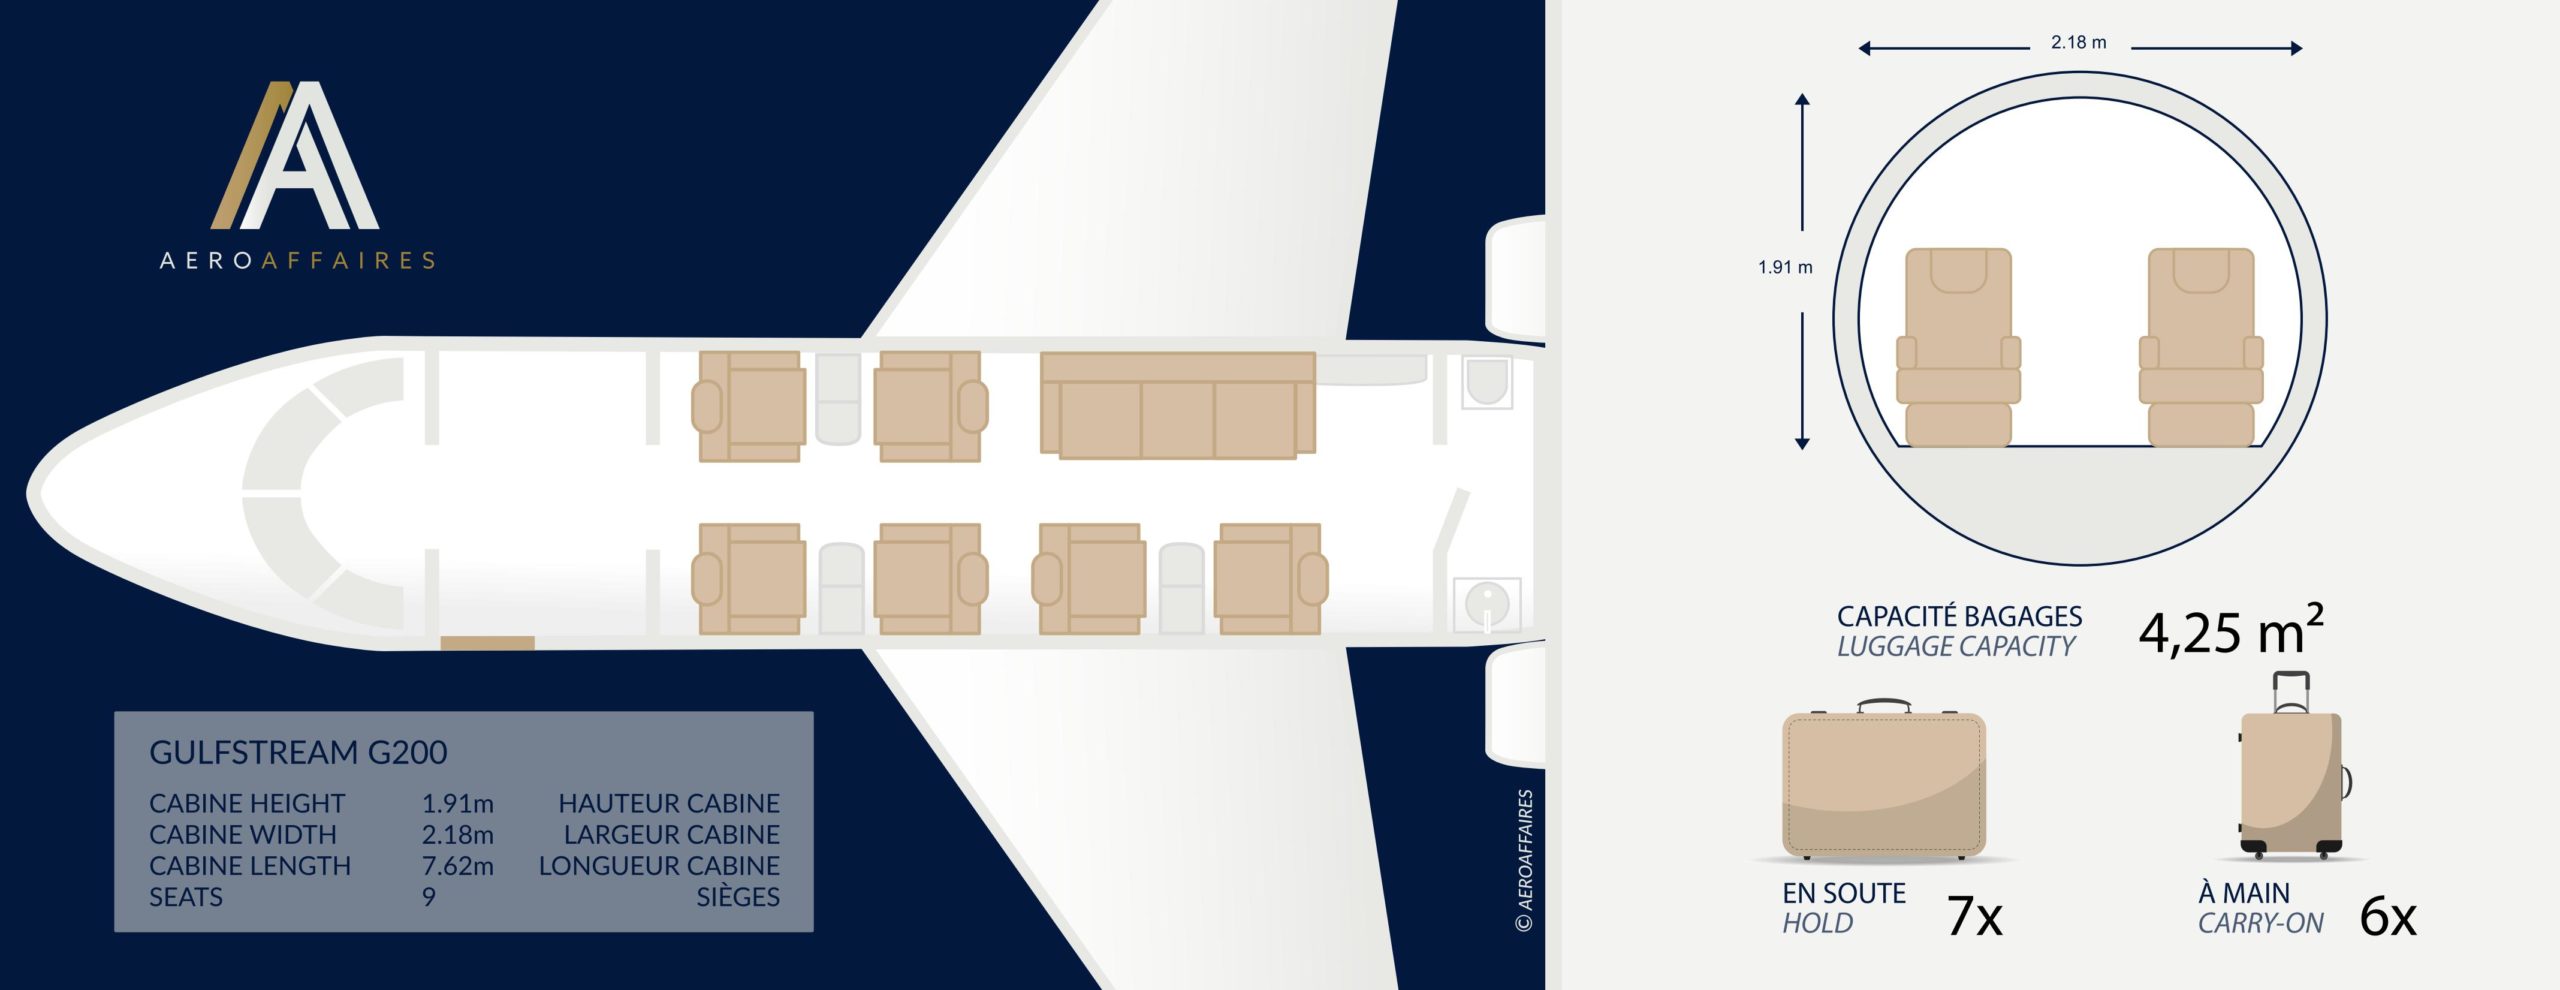 Plan intérieur cabine jet privé Gulfstream G200